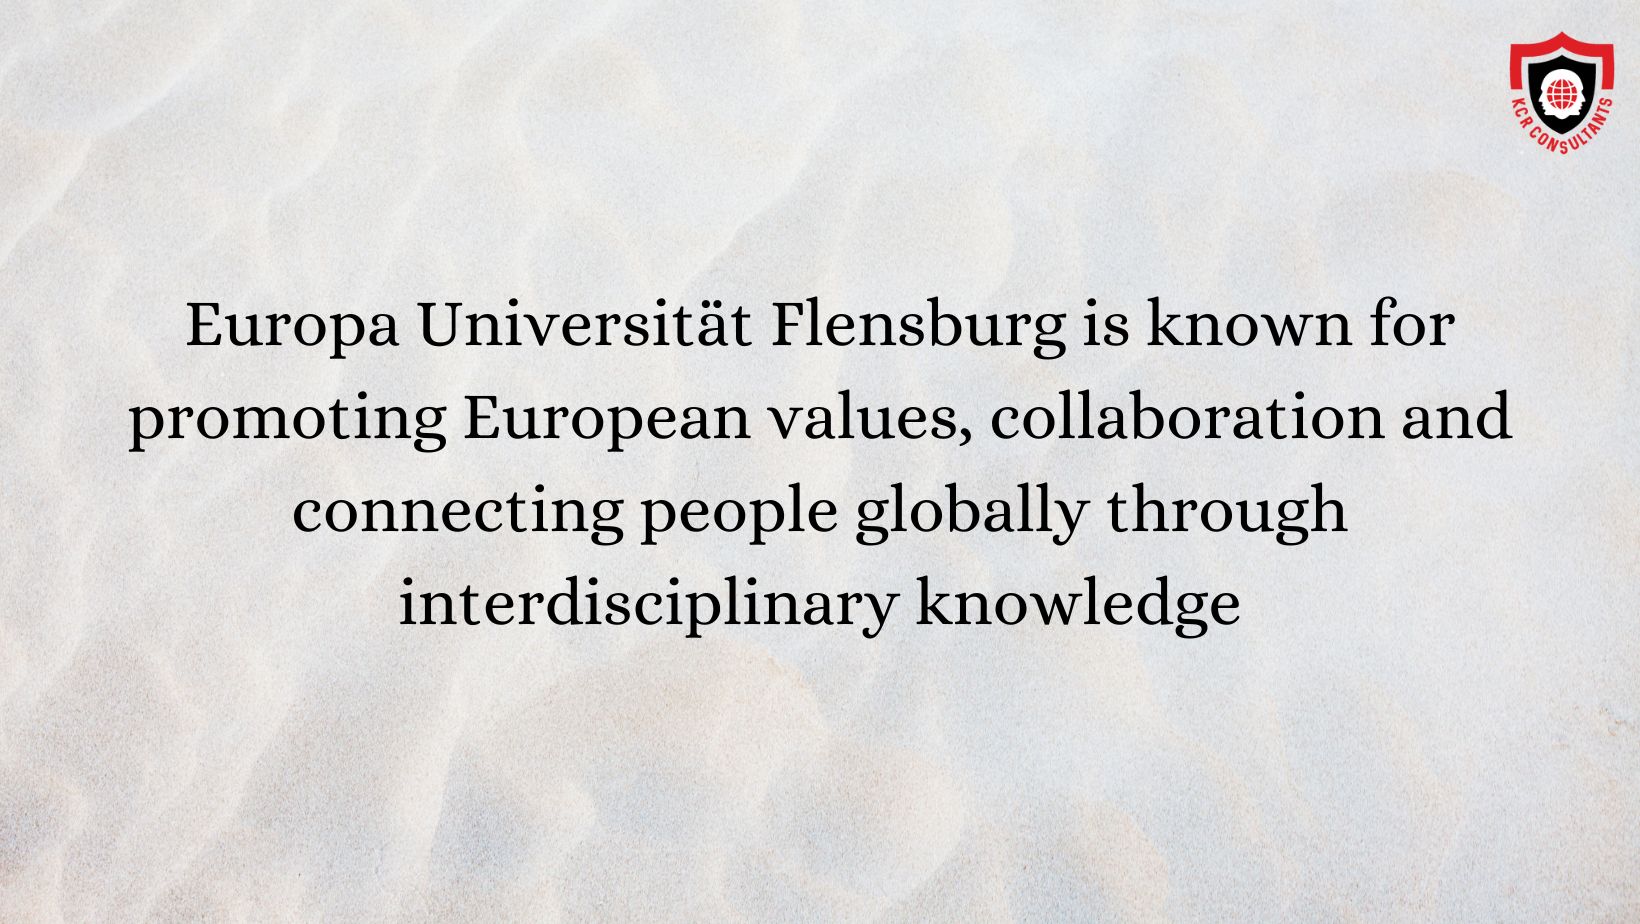 Europa Universität Flensburg - KCR CONSULTANTS - Introduction